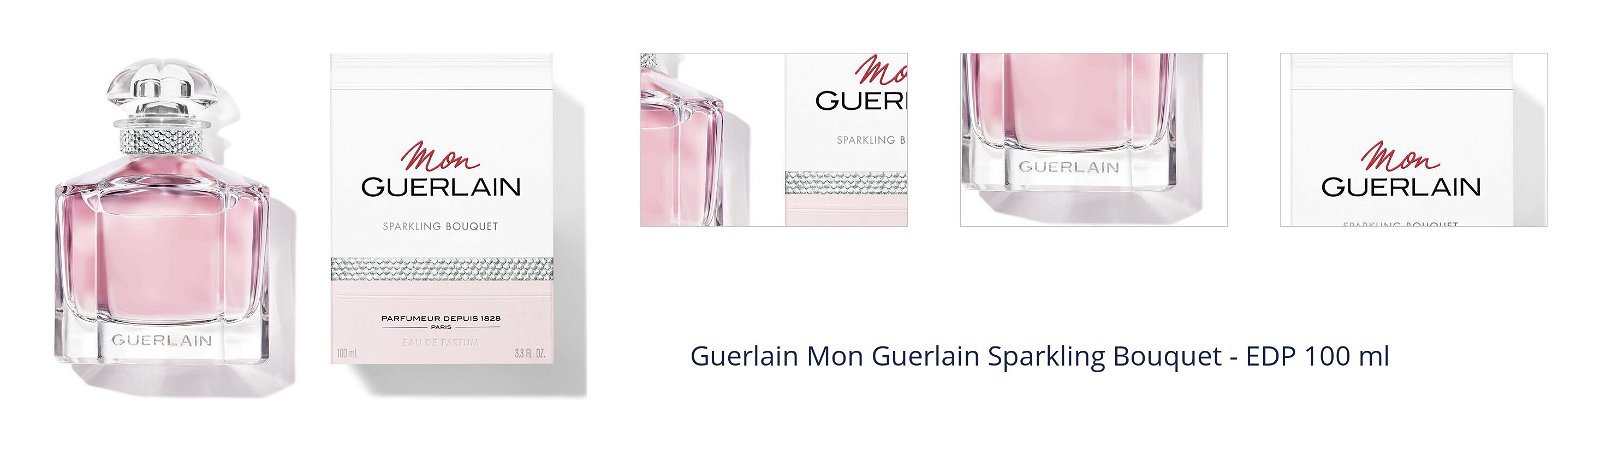 Guerlain Mon Guerlain Sparkling Bouquet - EDP 100 ml 1